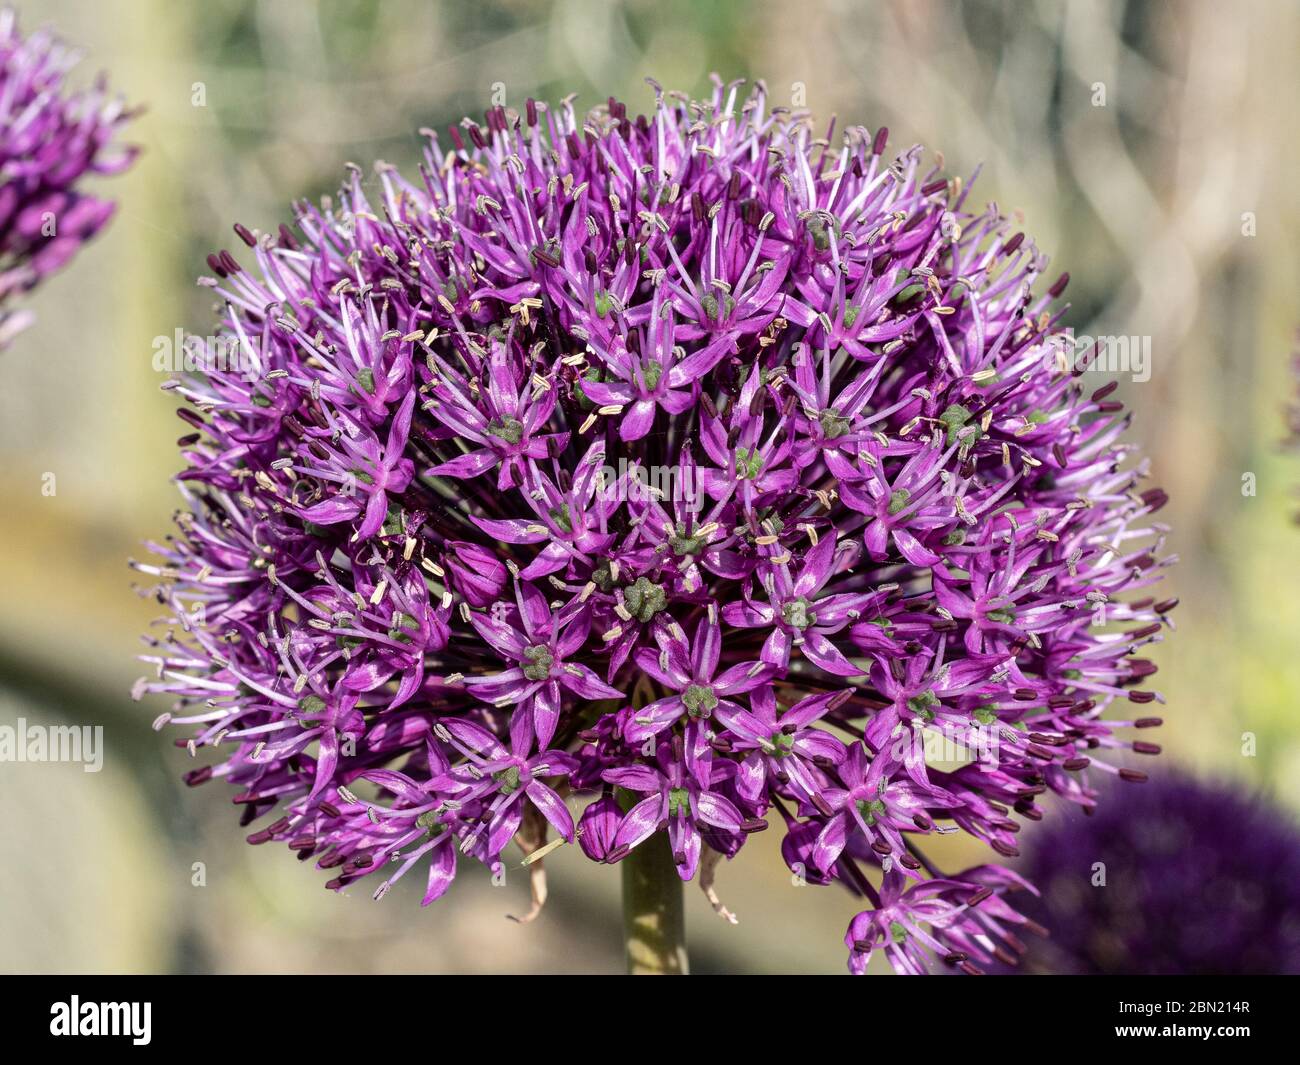 A close up of a single flowerhead of Allium Purple Sensation Stock Photo